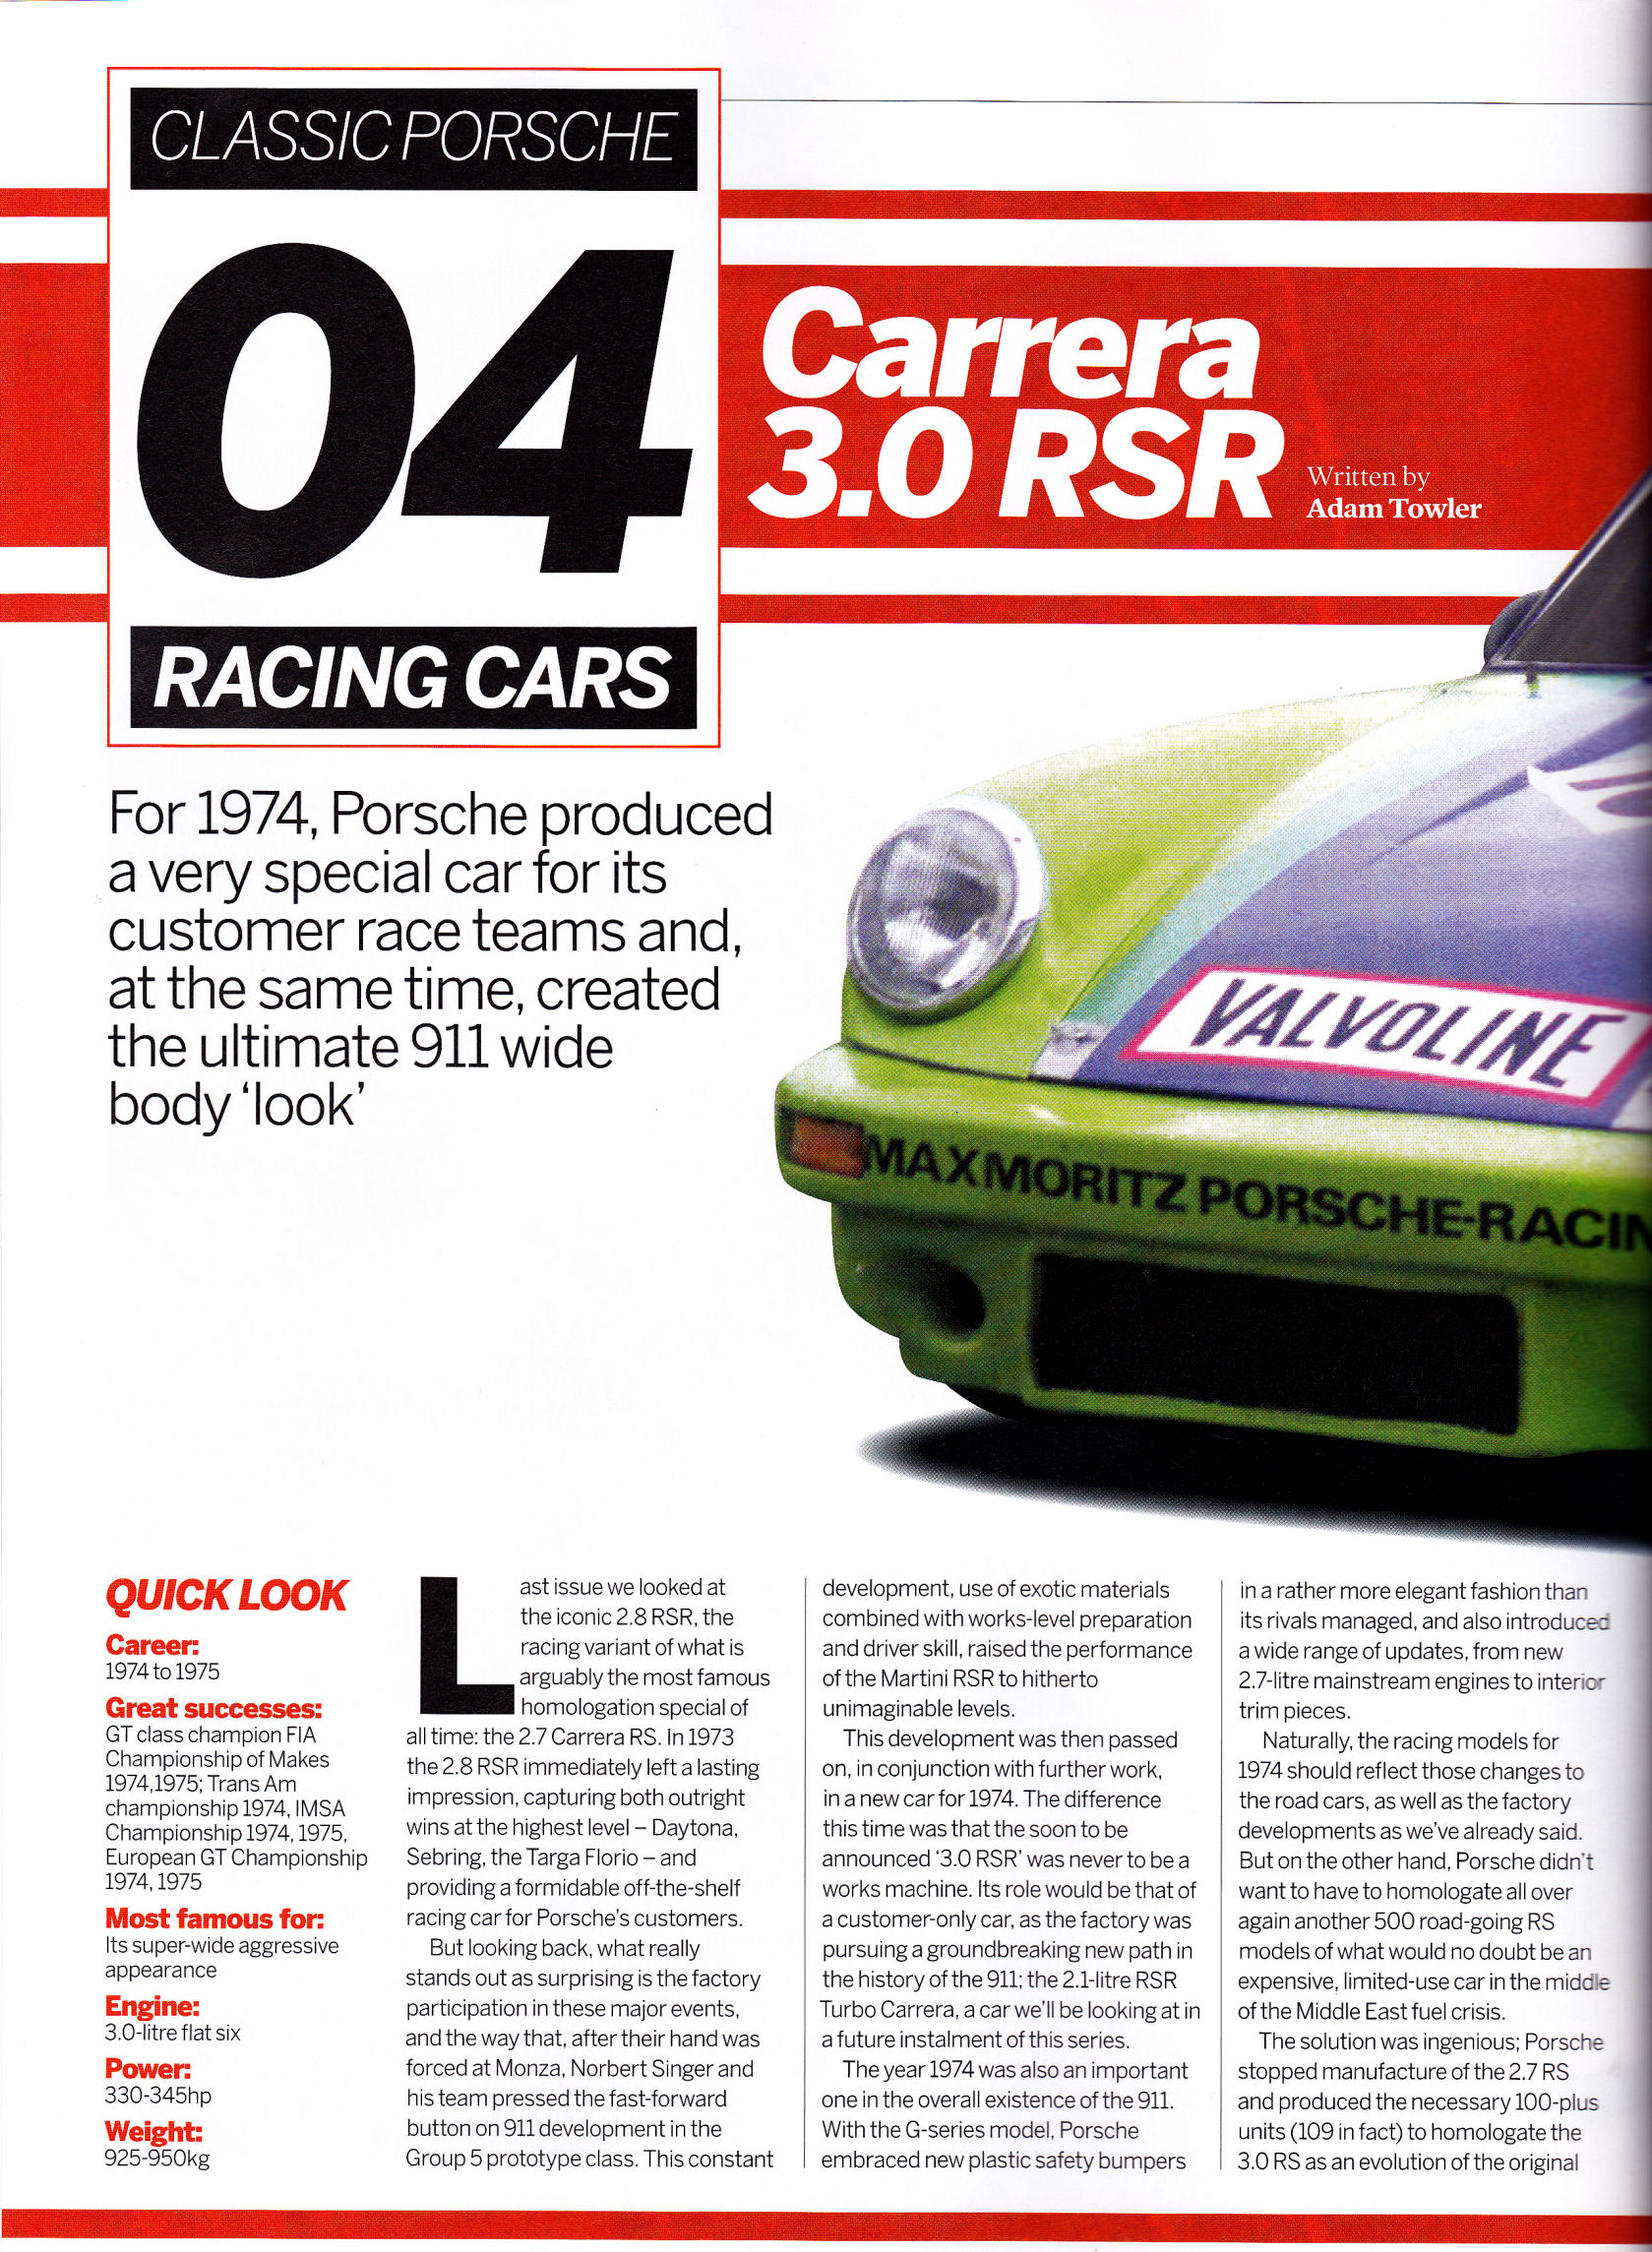 Porsche Carrera 3.0 RSR